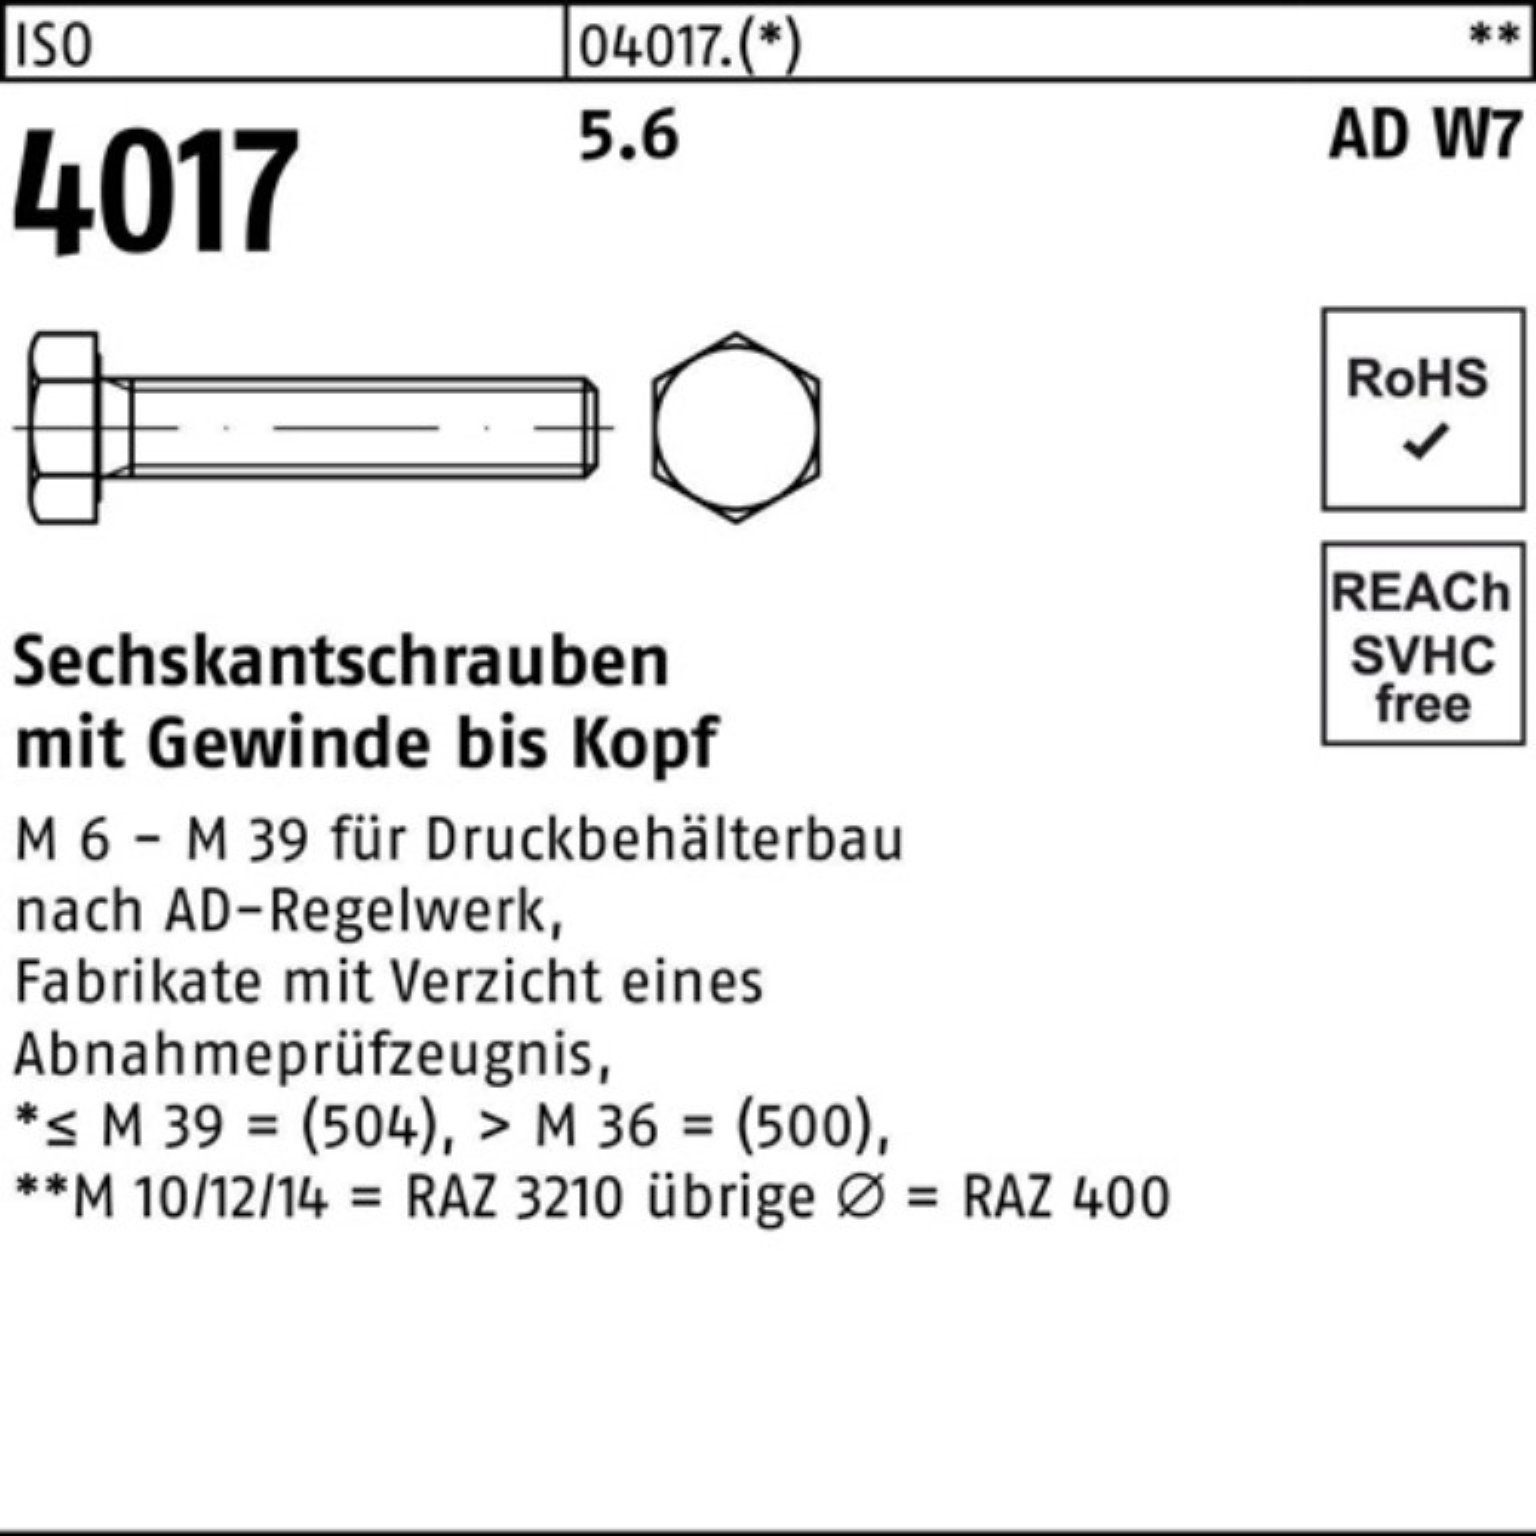 Bufab Sechskantschraube 100er AD Stück 4017 M27x IS VG 5.6 Pack Sechskantschraube W7 ISO 80 1